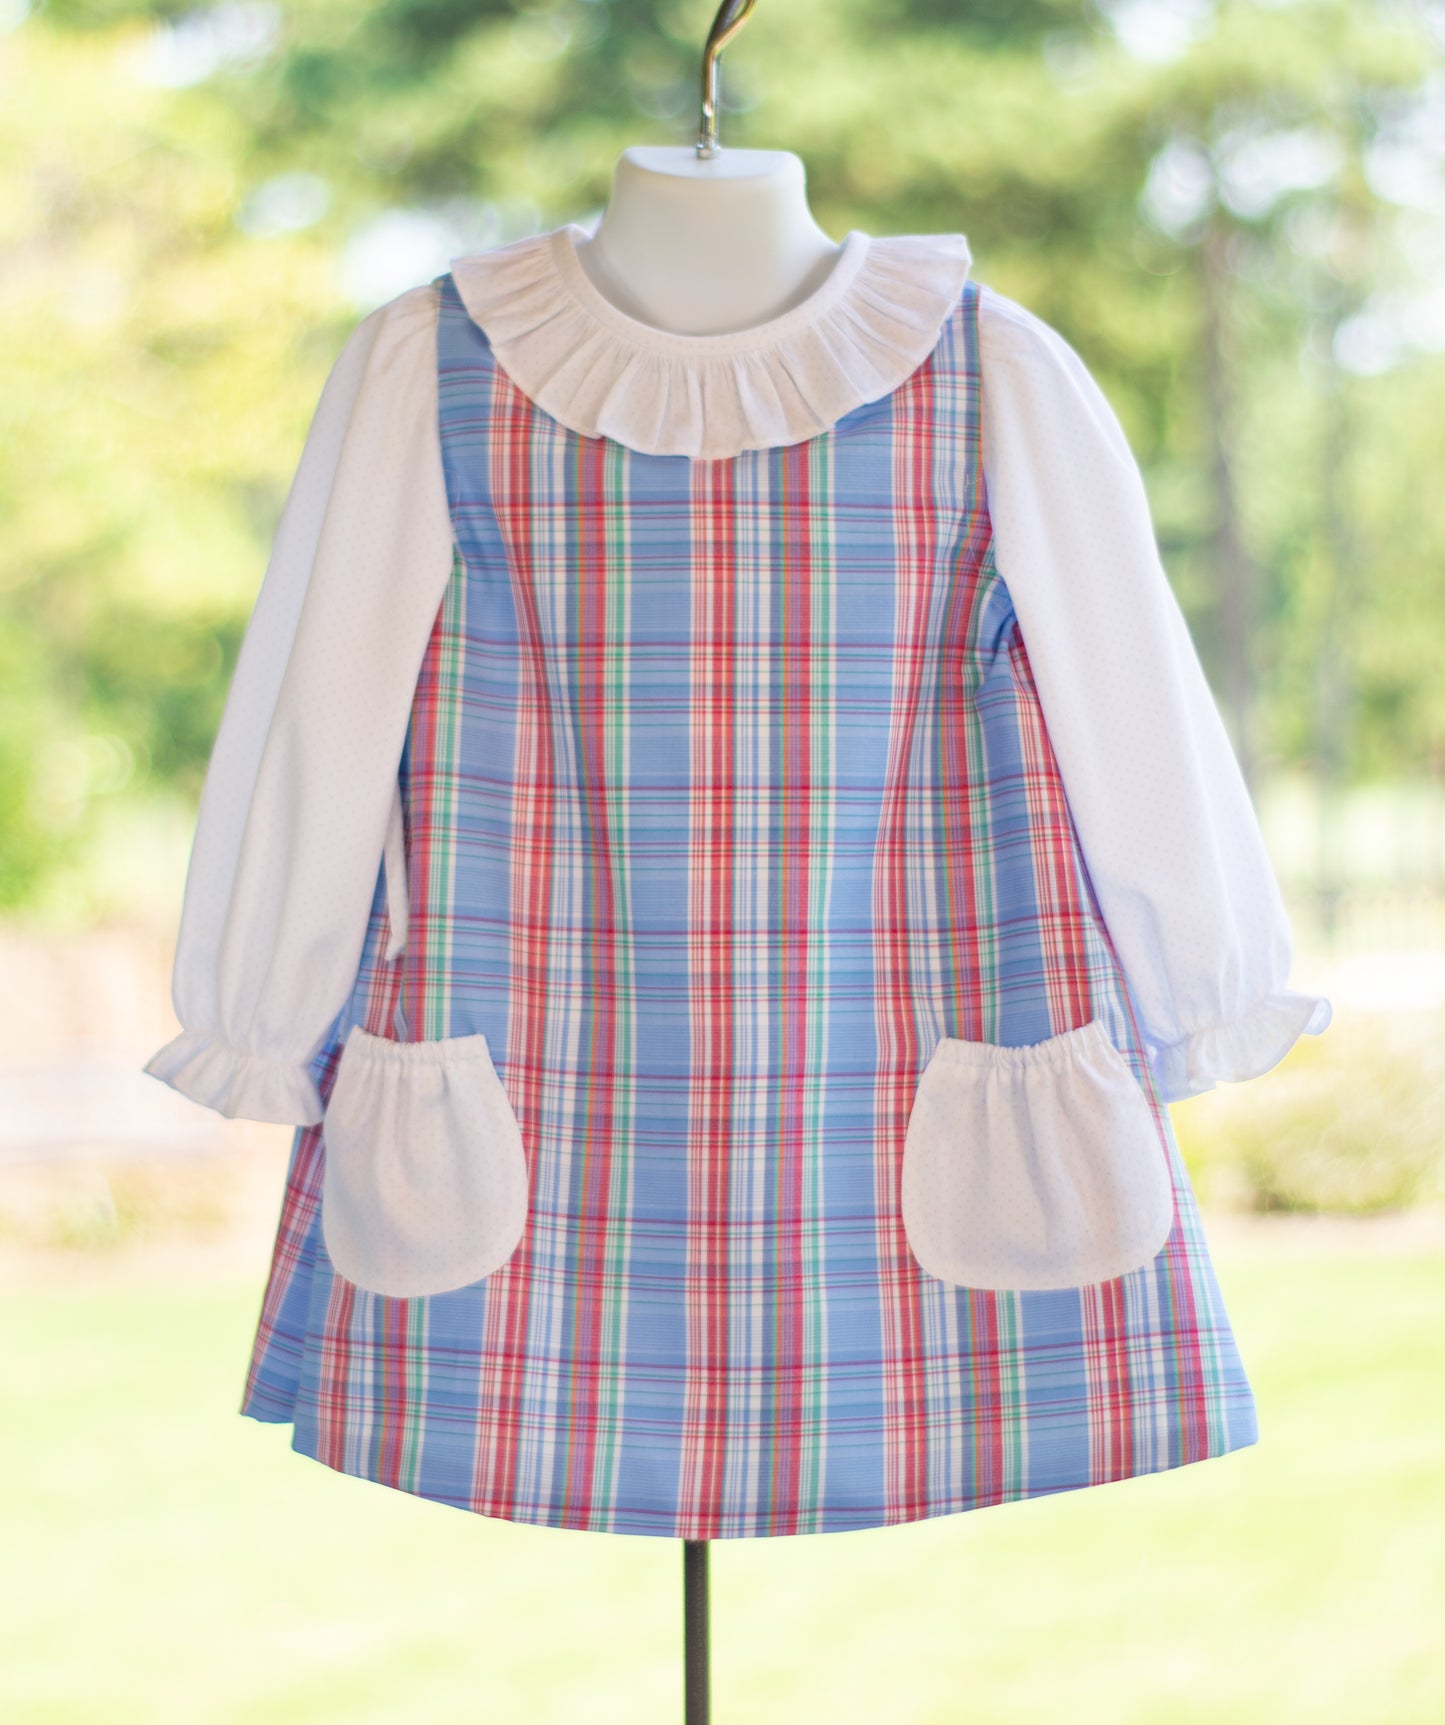 Preppy plaid Eleanor dress w/pockets + Jane blouse 4t set